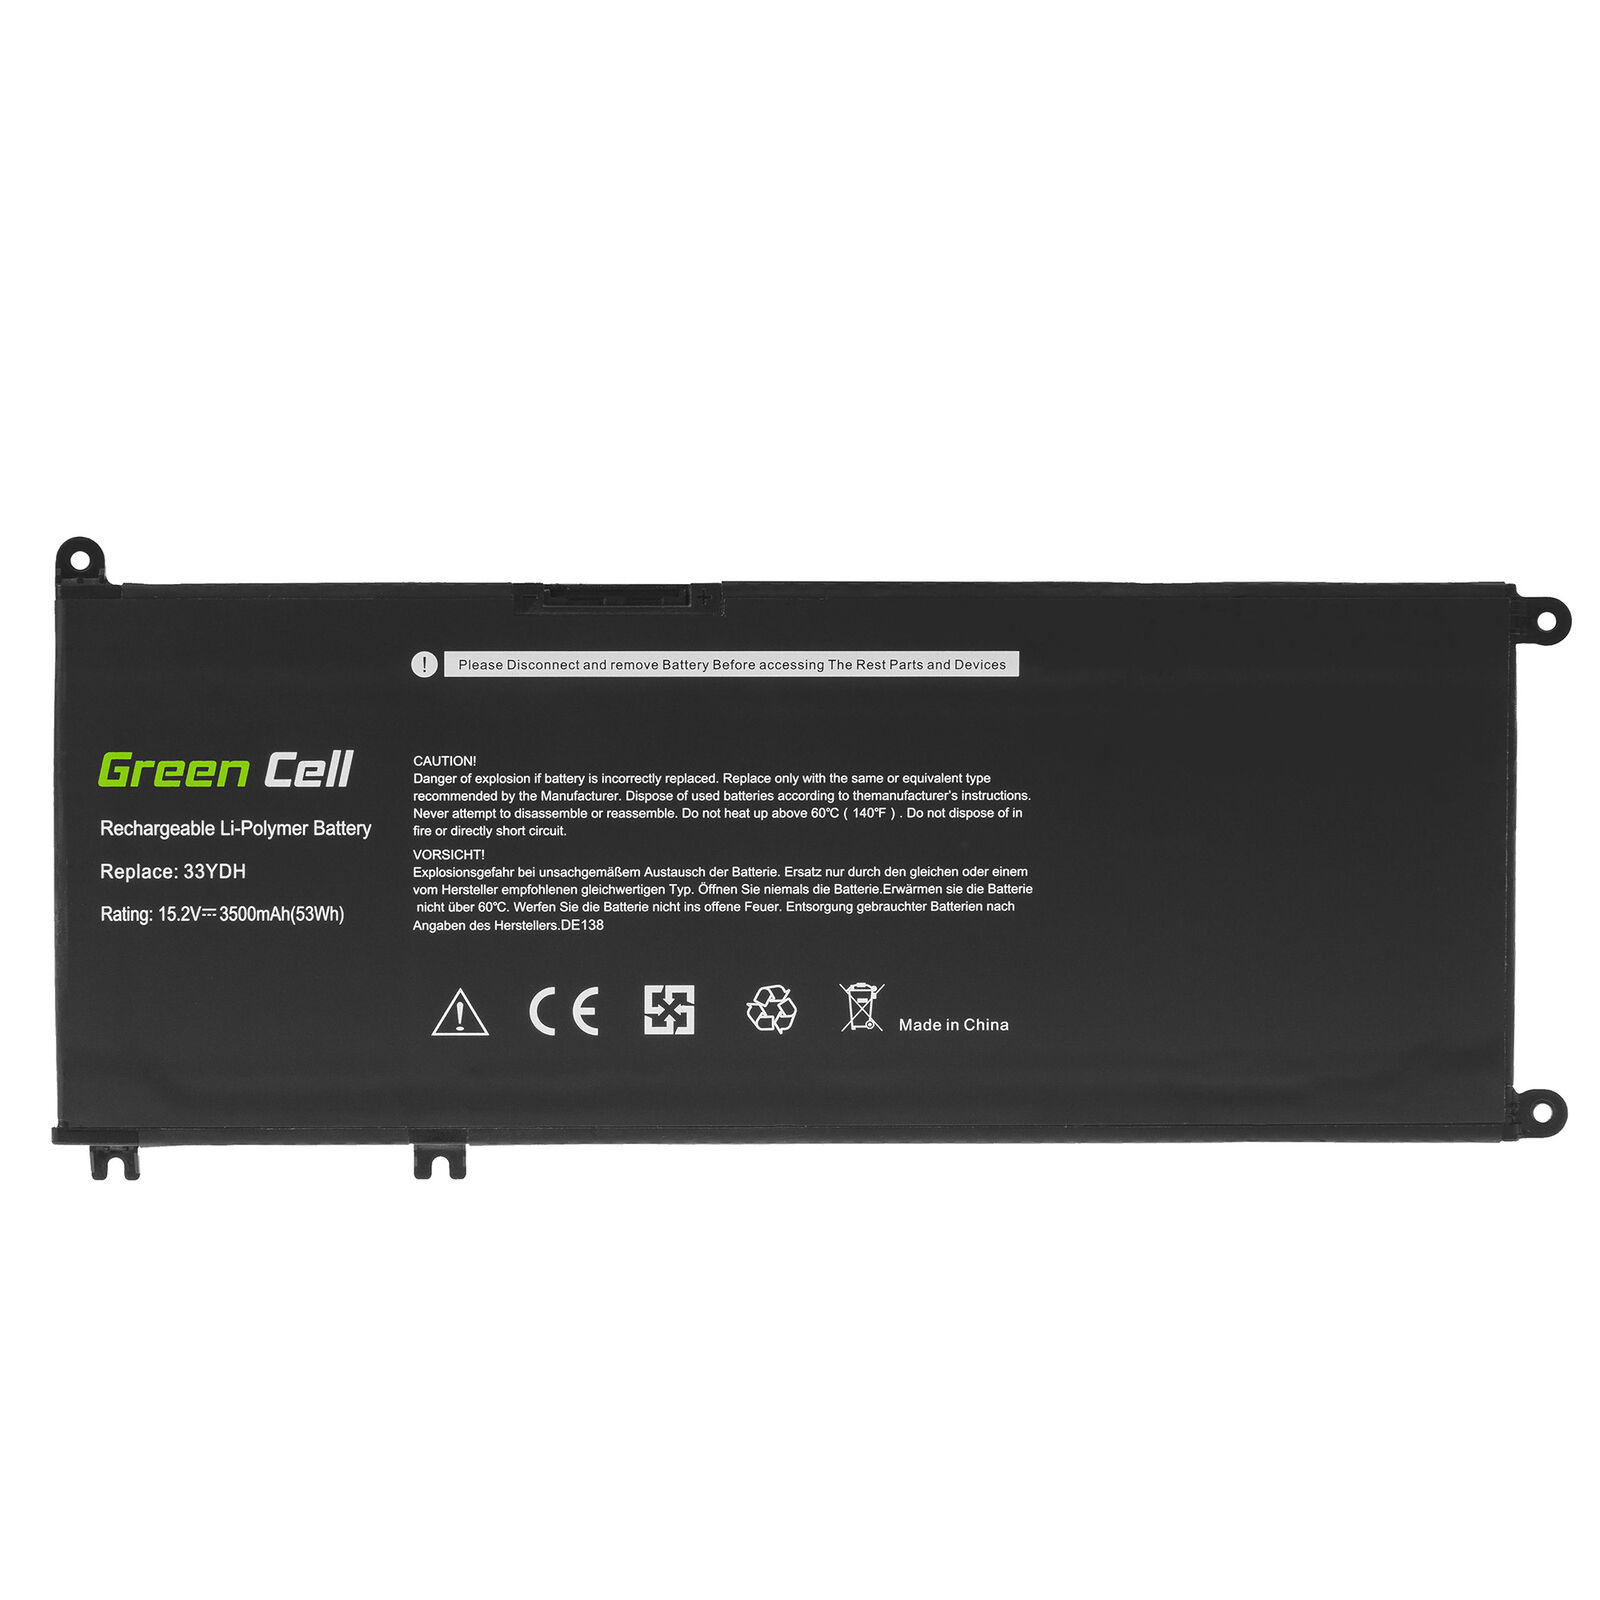 Dell Inspiron G3 17 3779 G5 15 5587 G7 15 7588 PVHT1 DNCWSCB6106B compatible battery